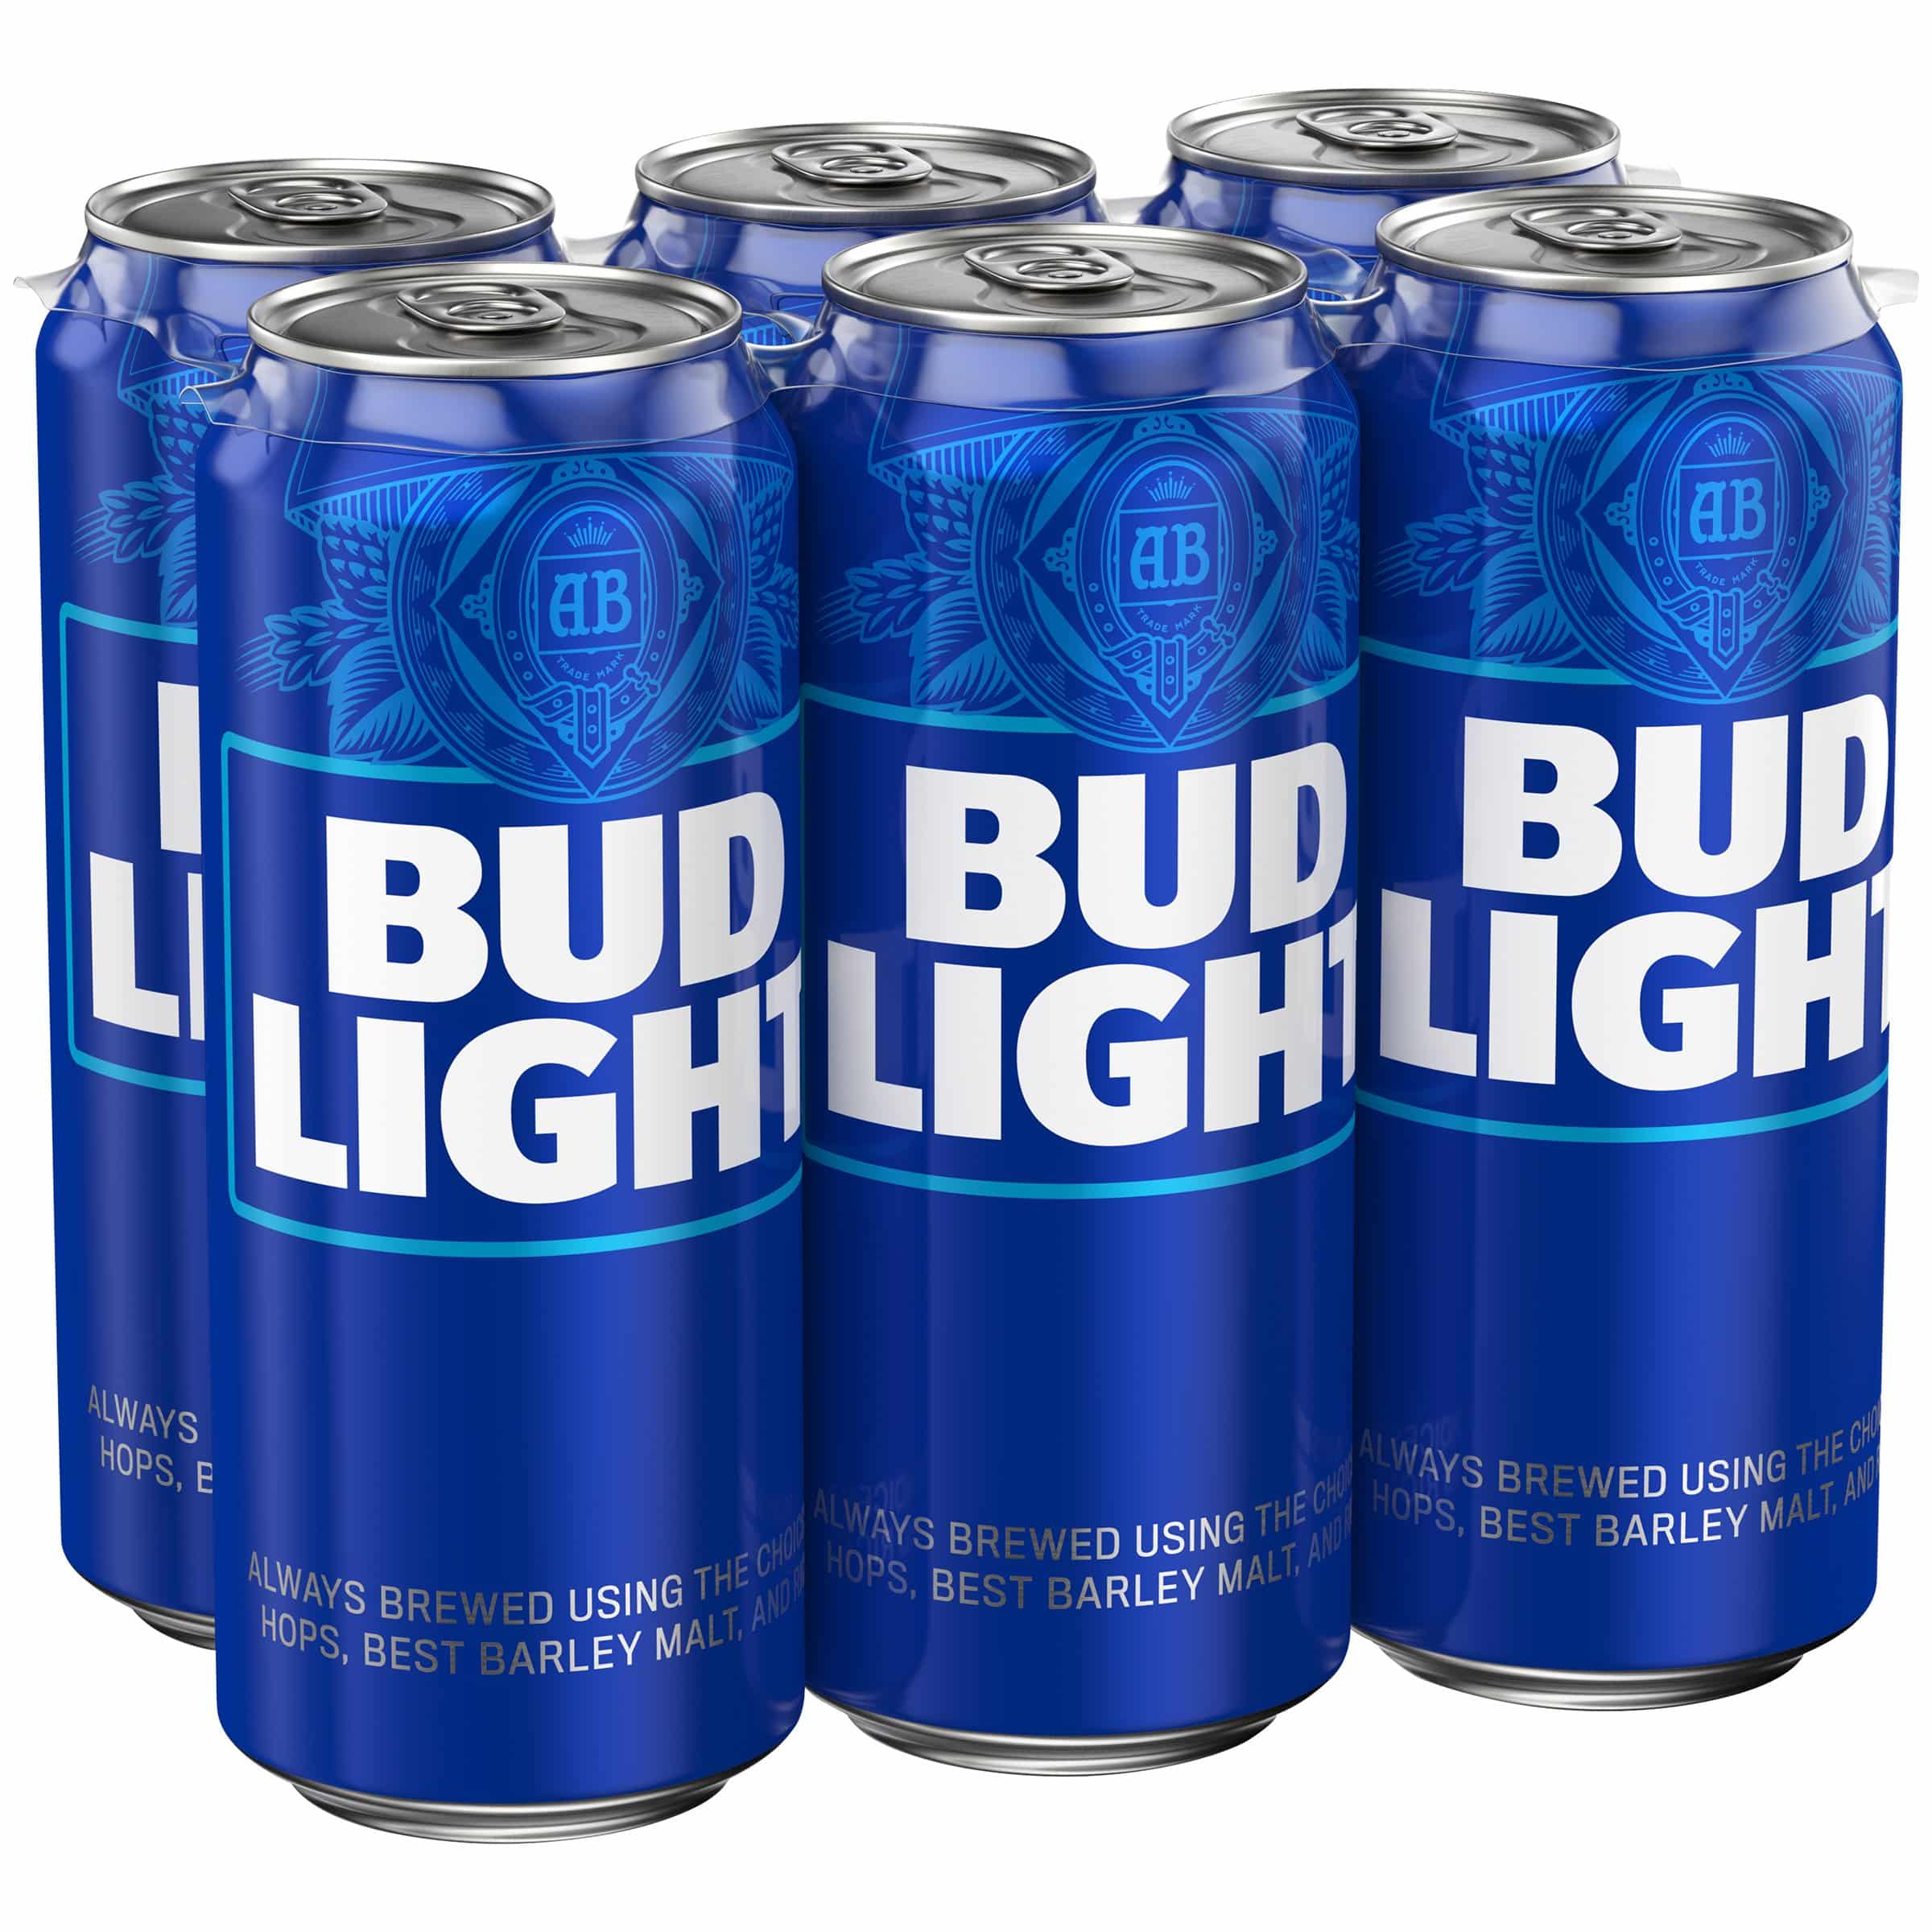 Bud Light Beer 16 oz Cans